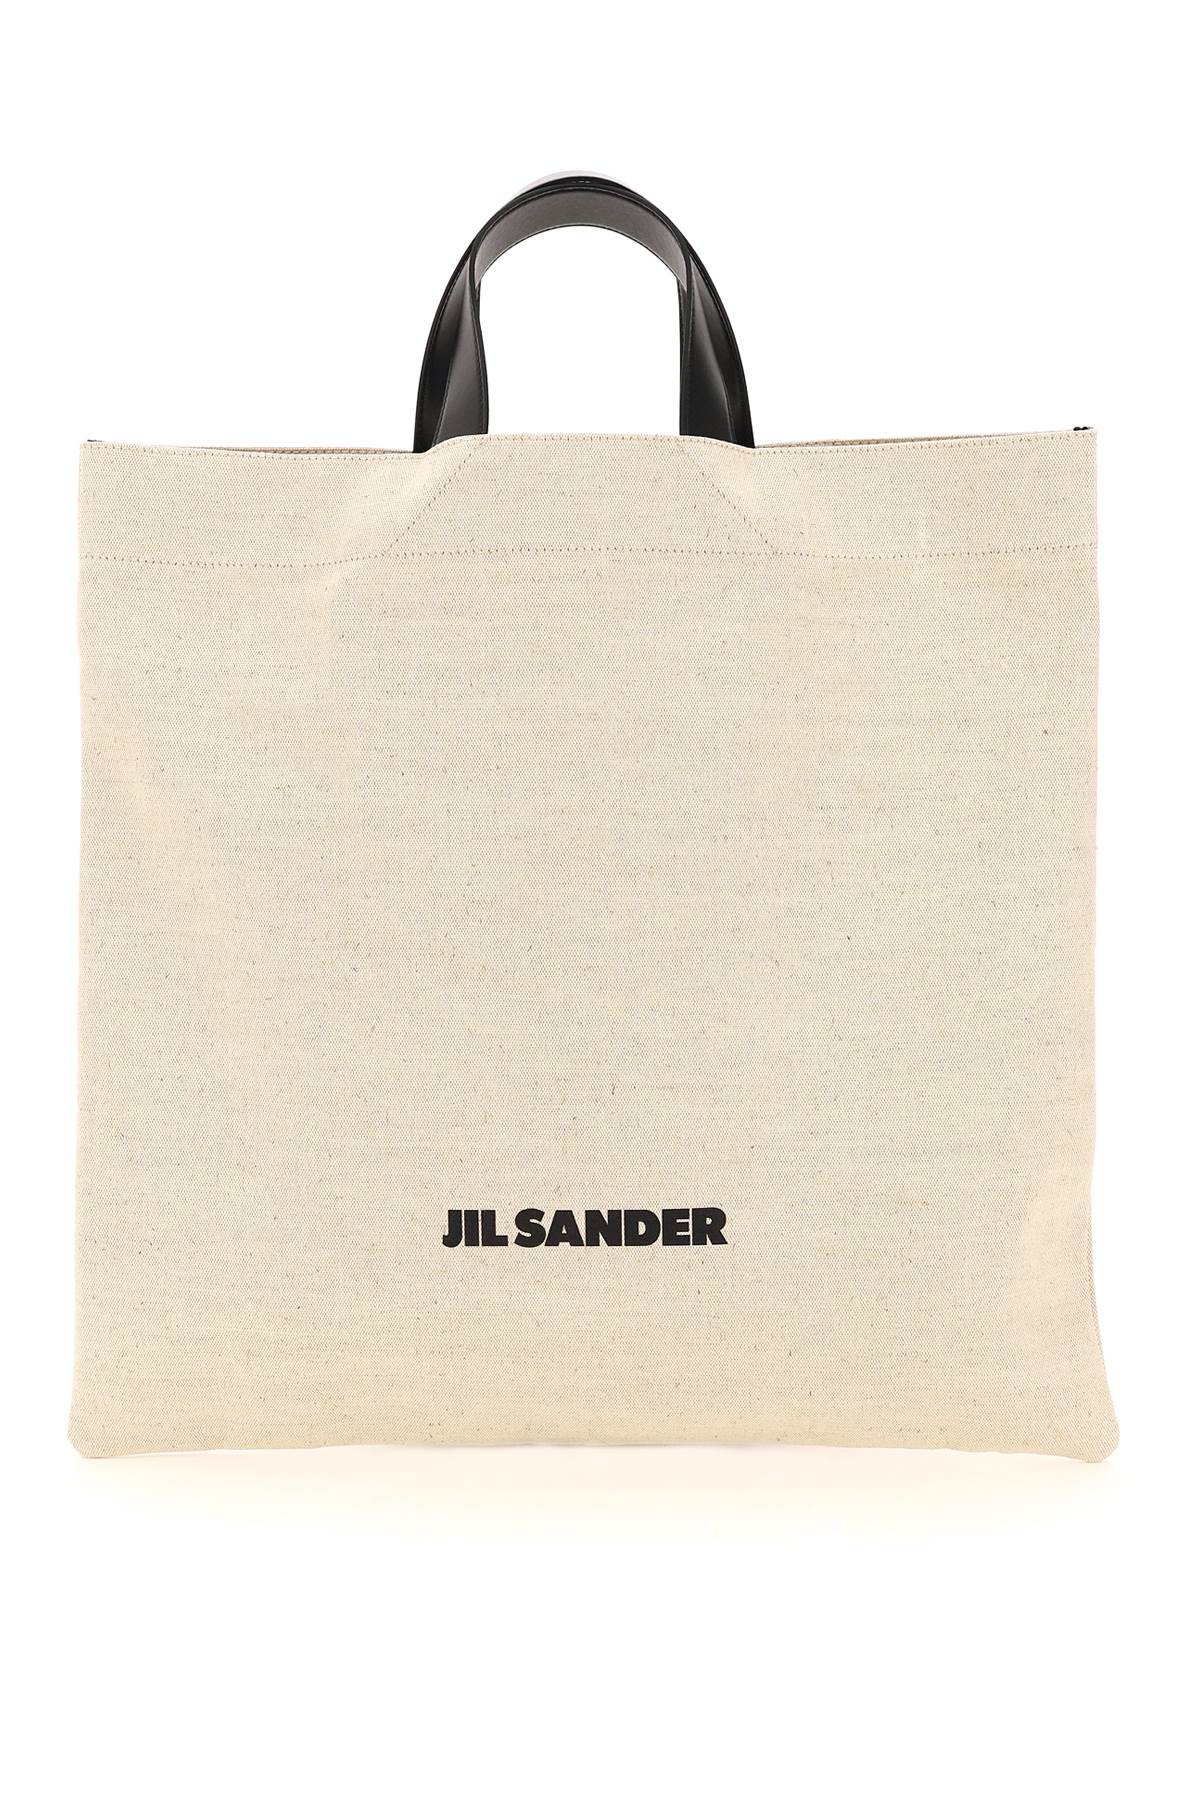 Jil Sander Canvas Squared Tote Bag